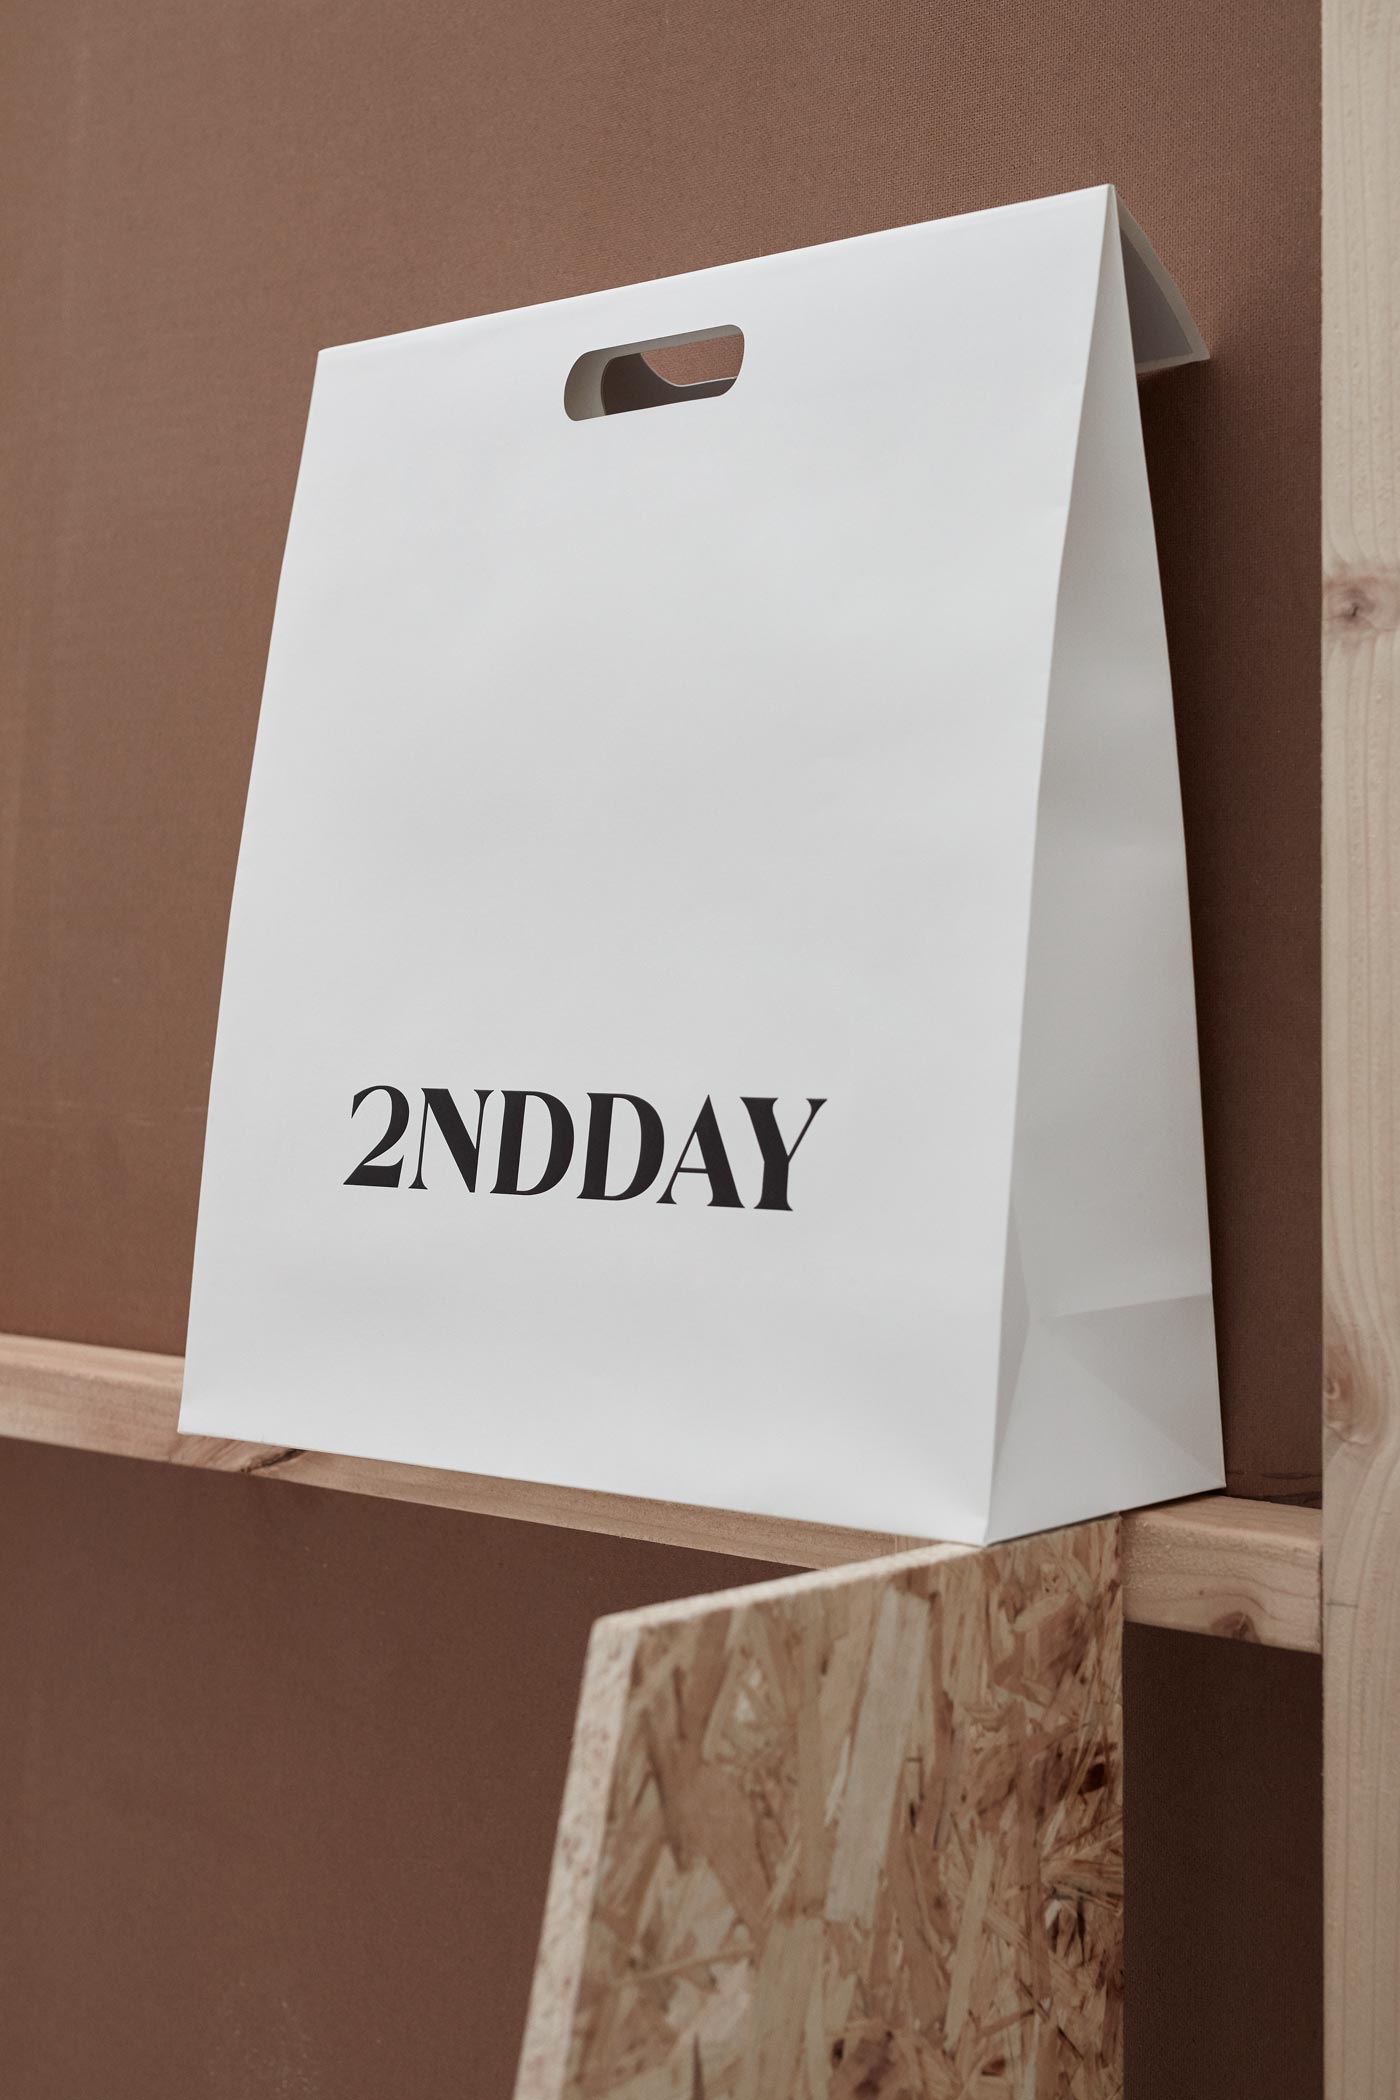 2ndday – Brand identity & packaging